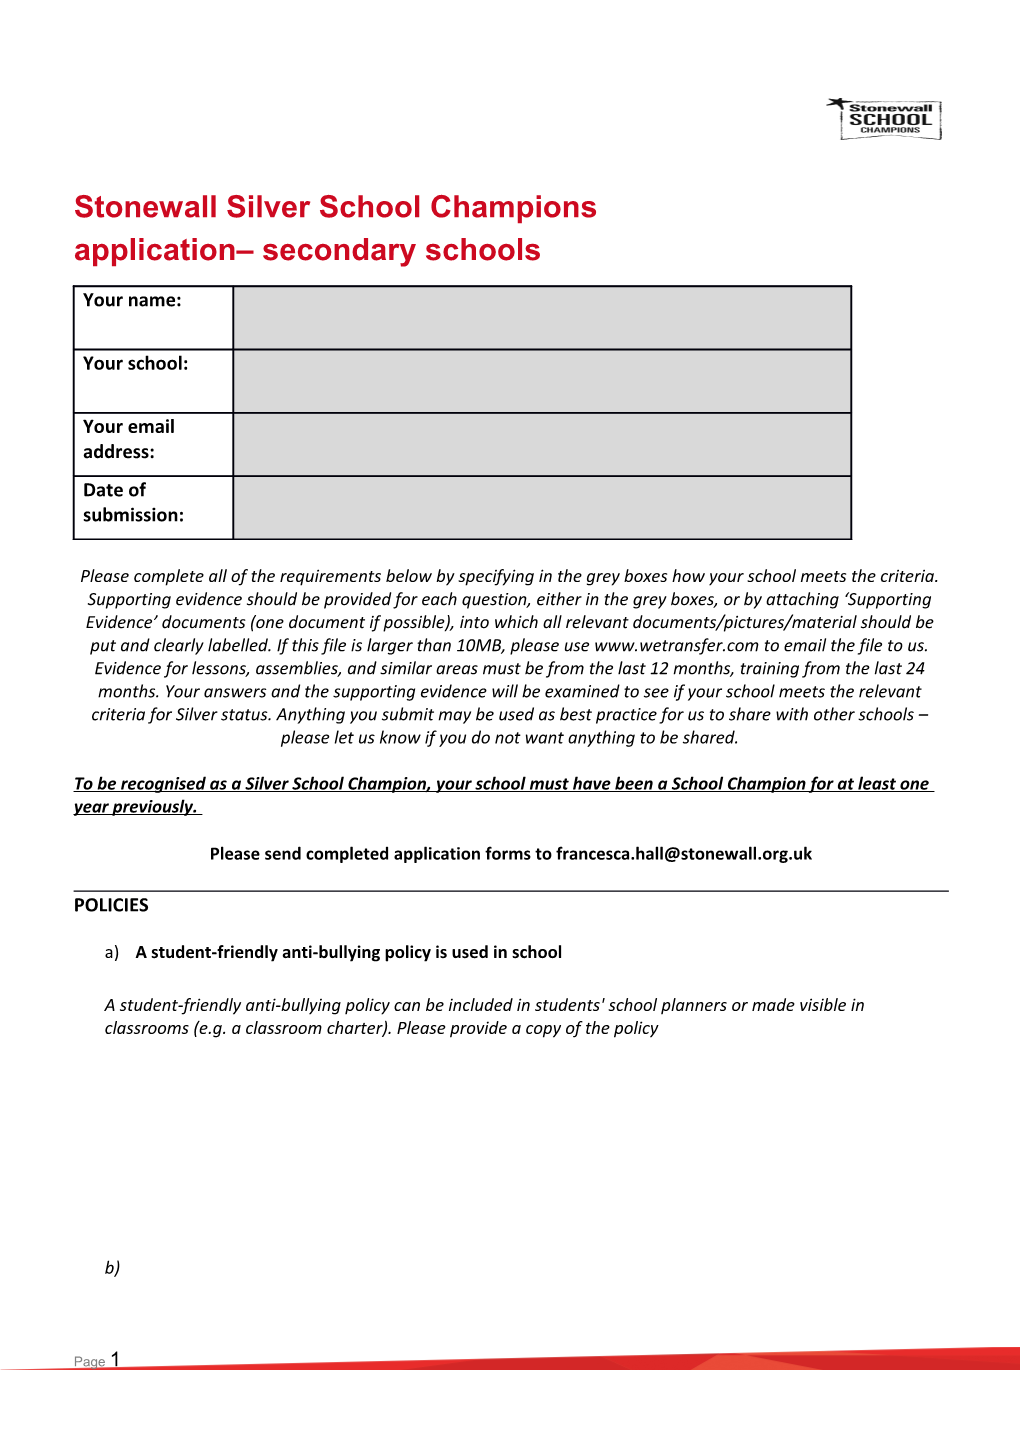 Stonewall Silverschool Champions Application Secondary Schools